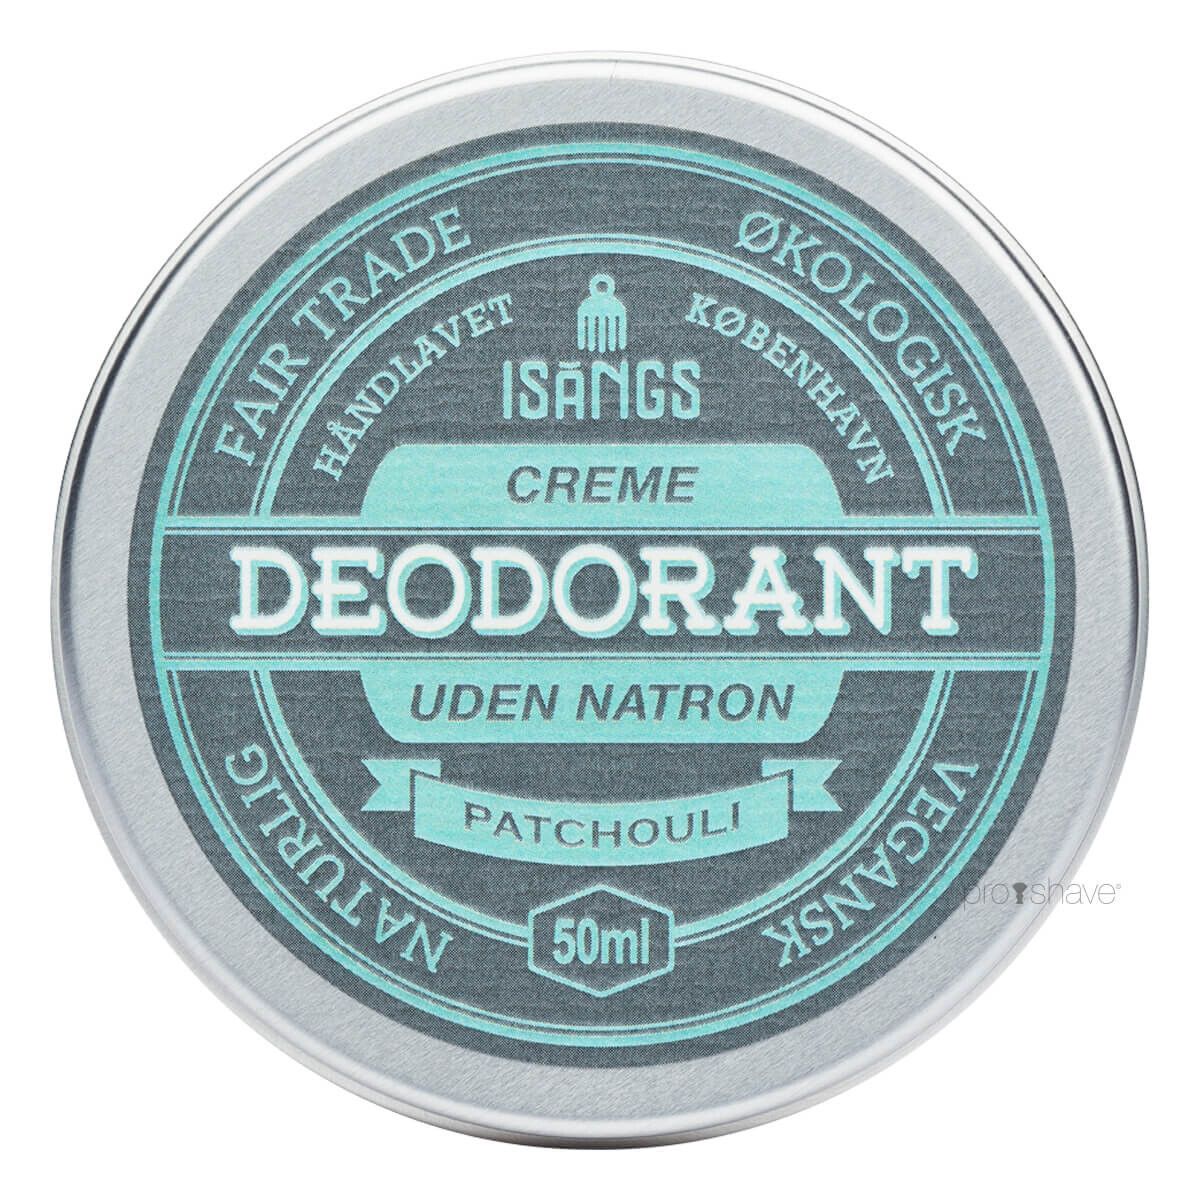 Billede af Isangs Creme Deodorant uden Natron, Patchouli, 50 ml.